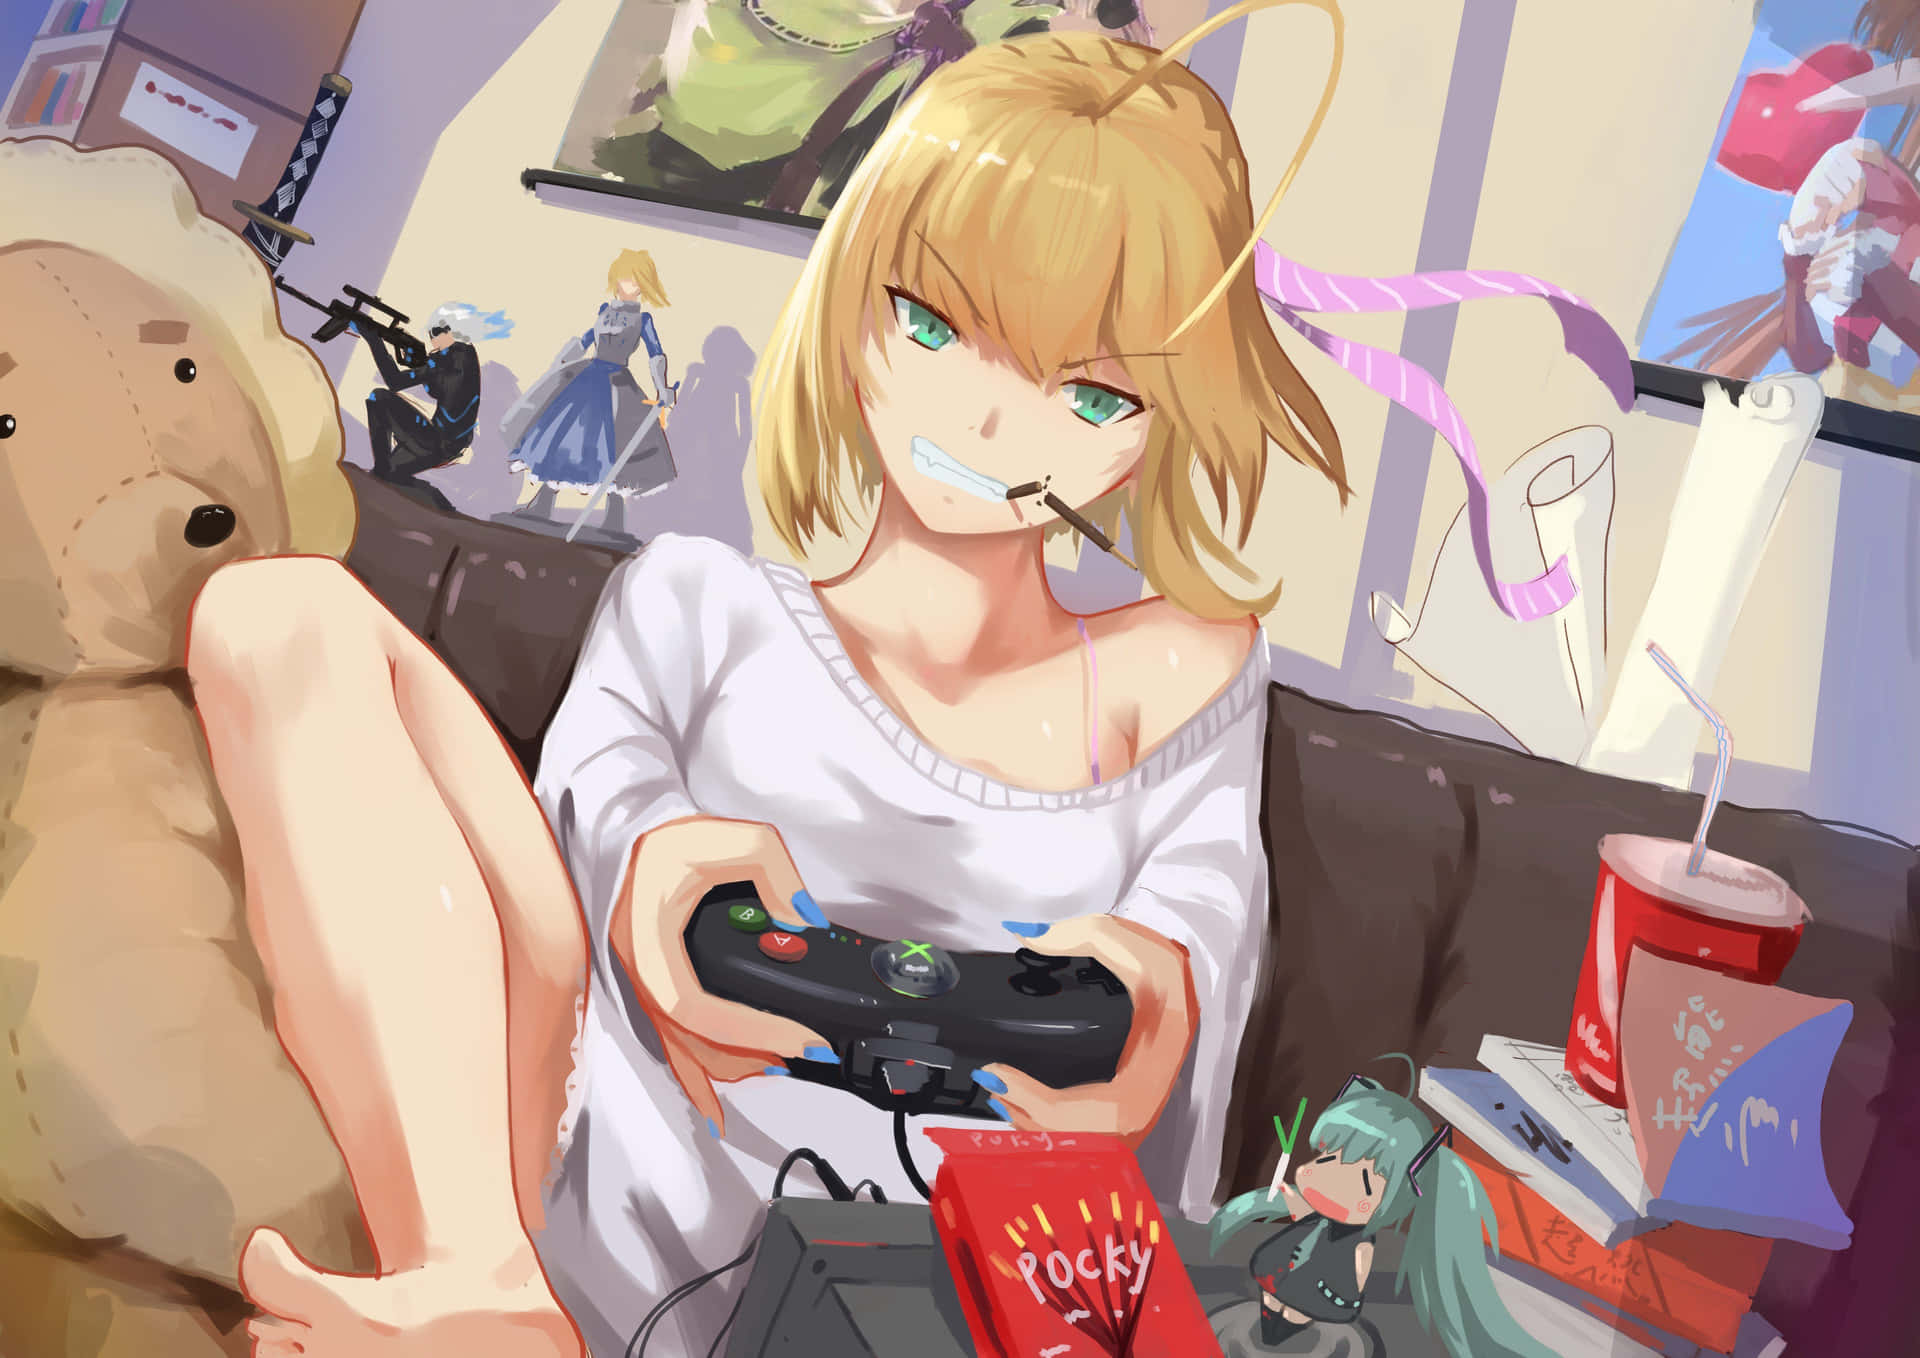 Xbox Pfp Anime Girl Wallpaper